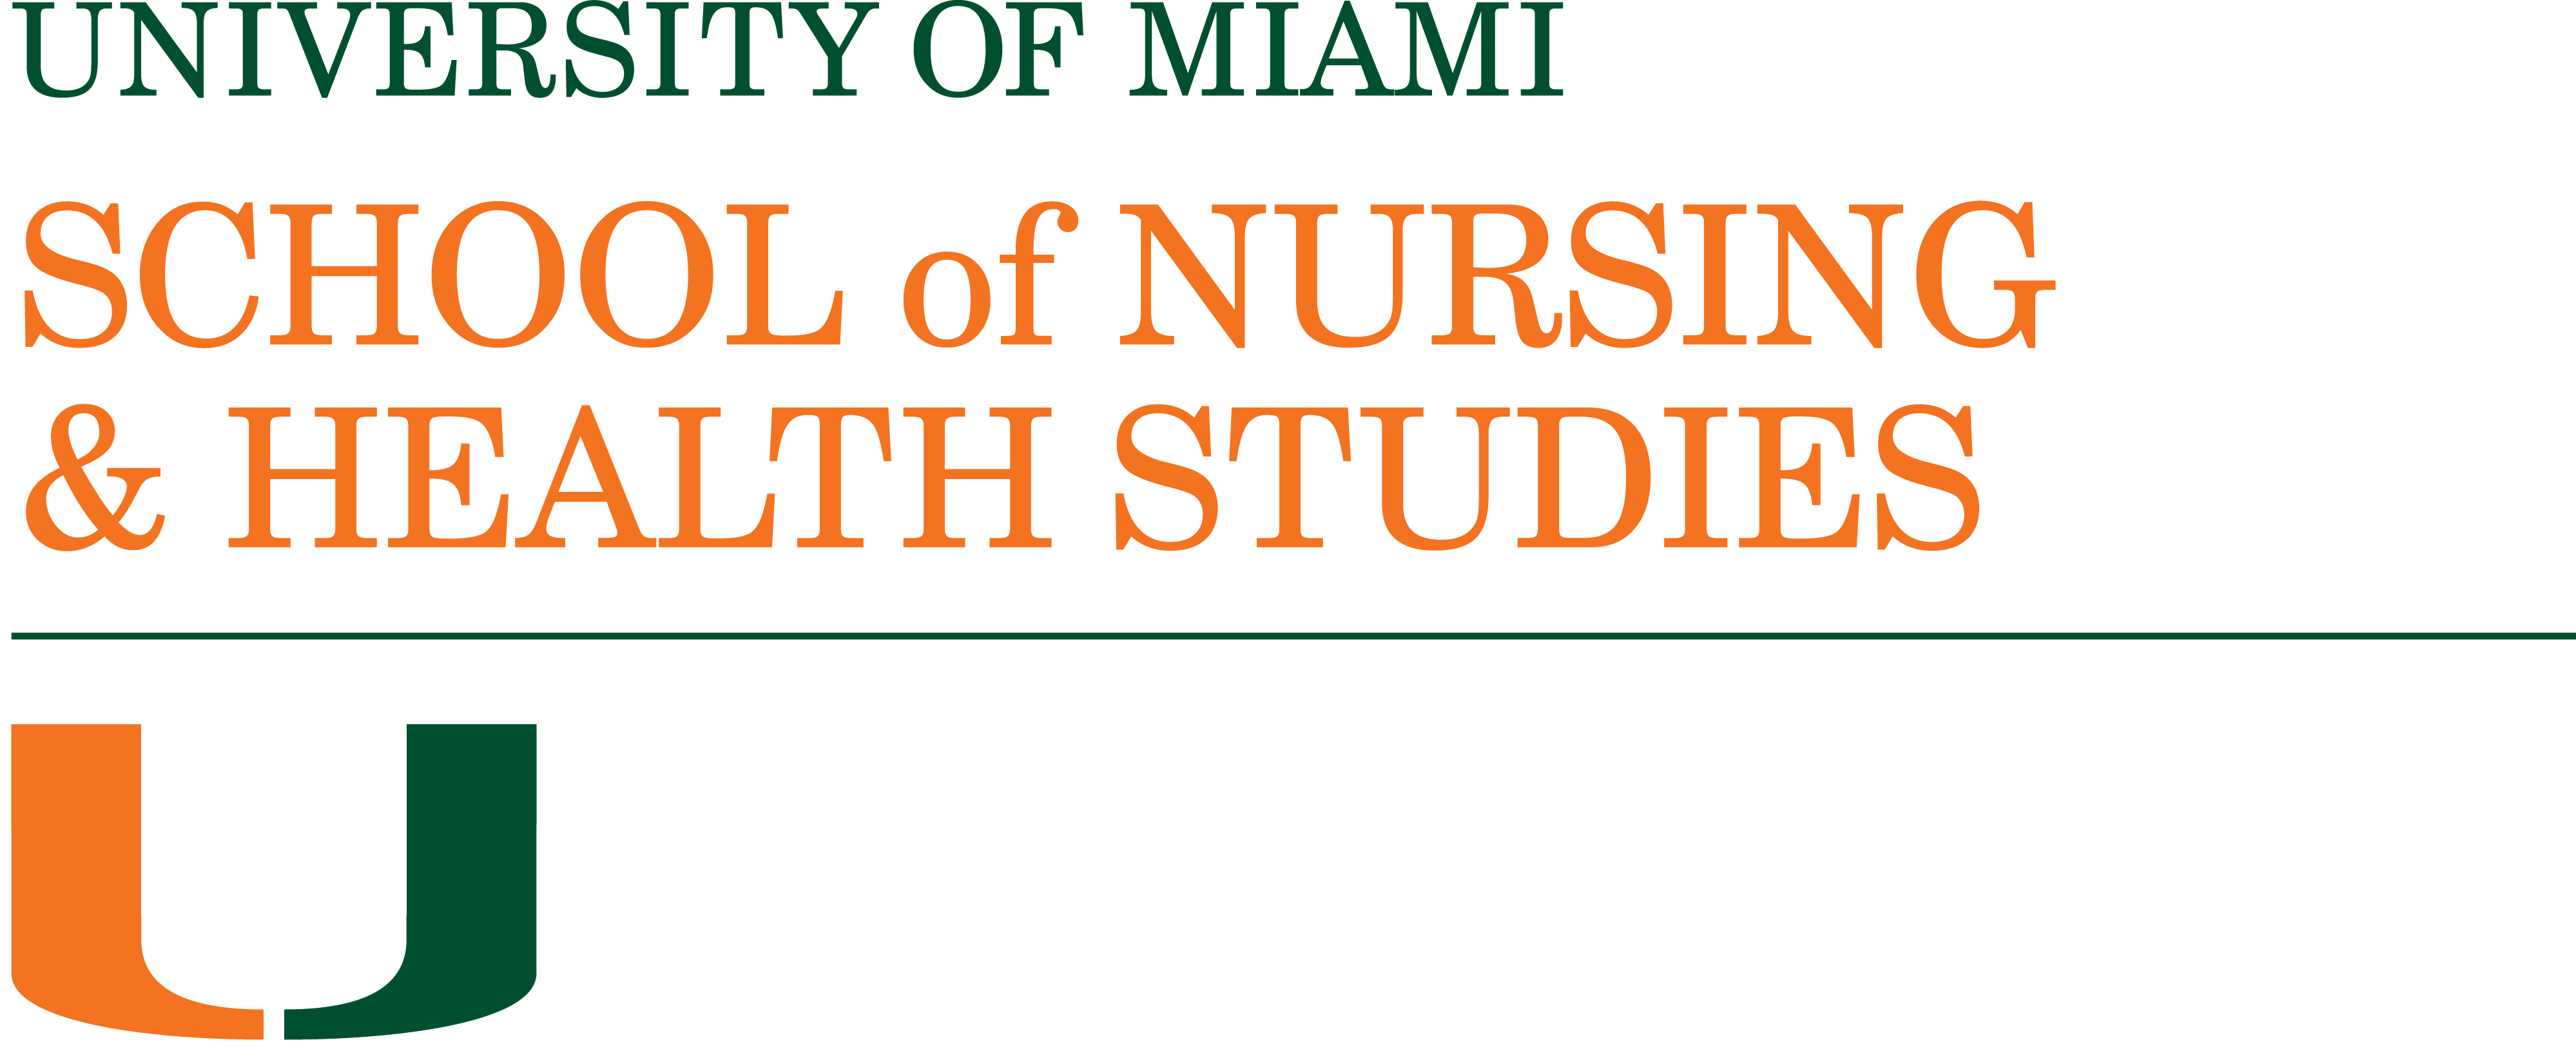 University of Miami School of Nursing and Health Studies